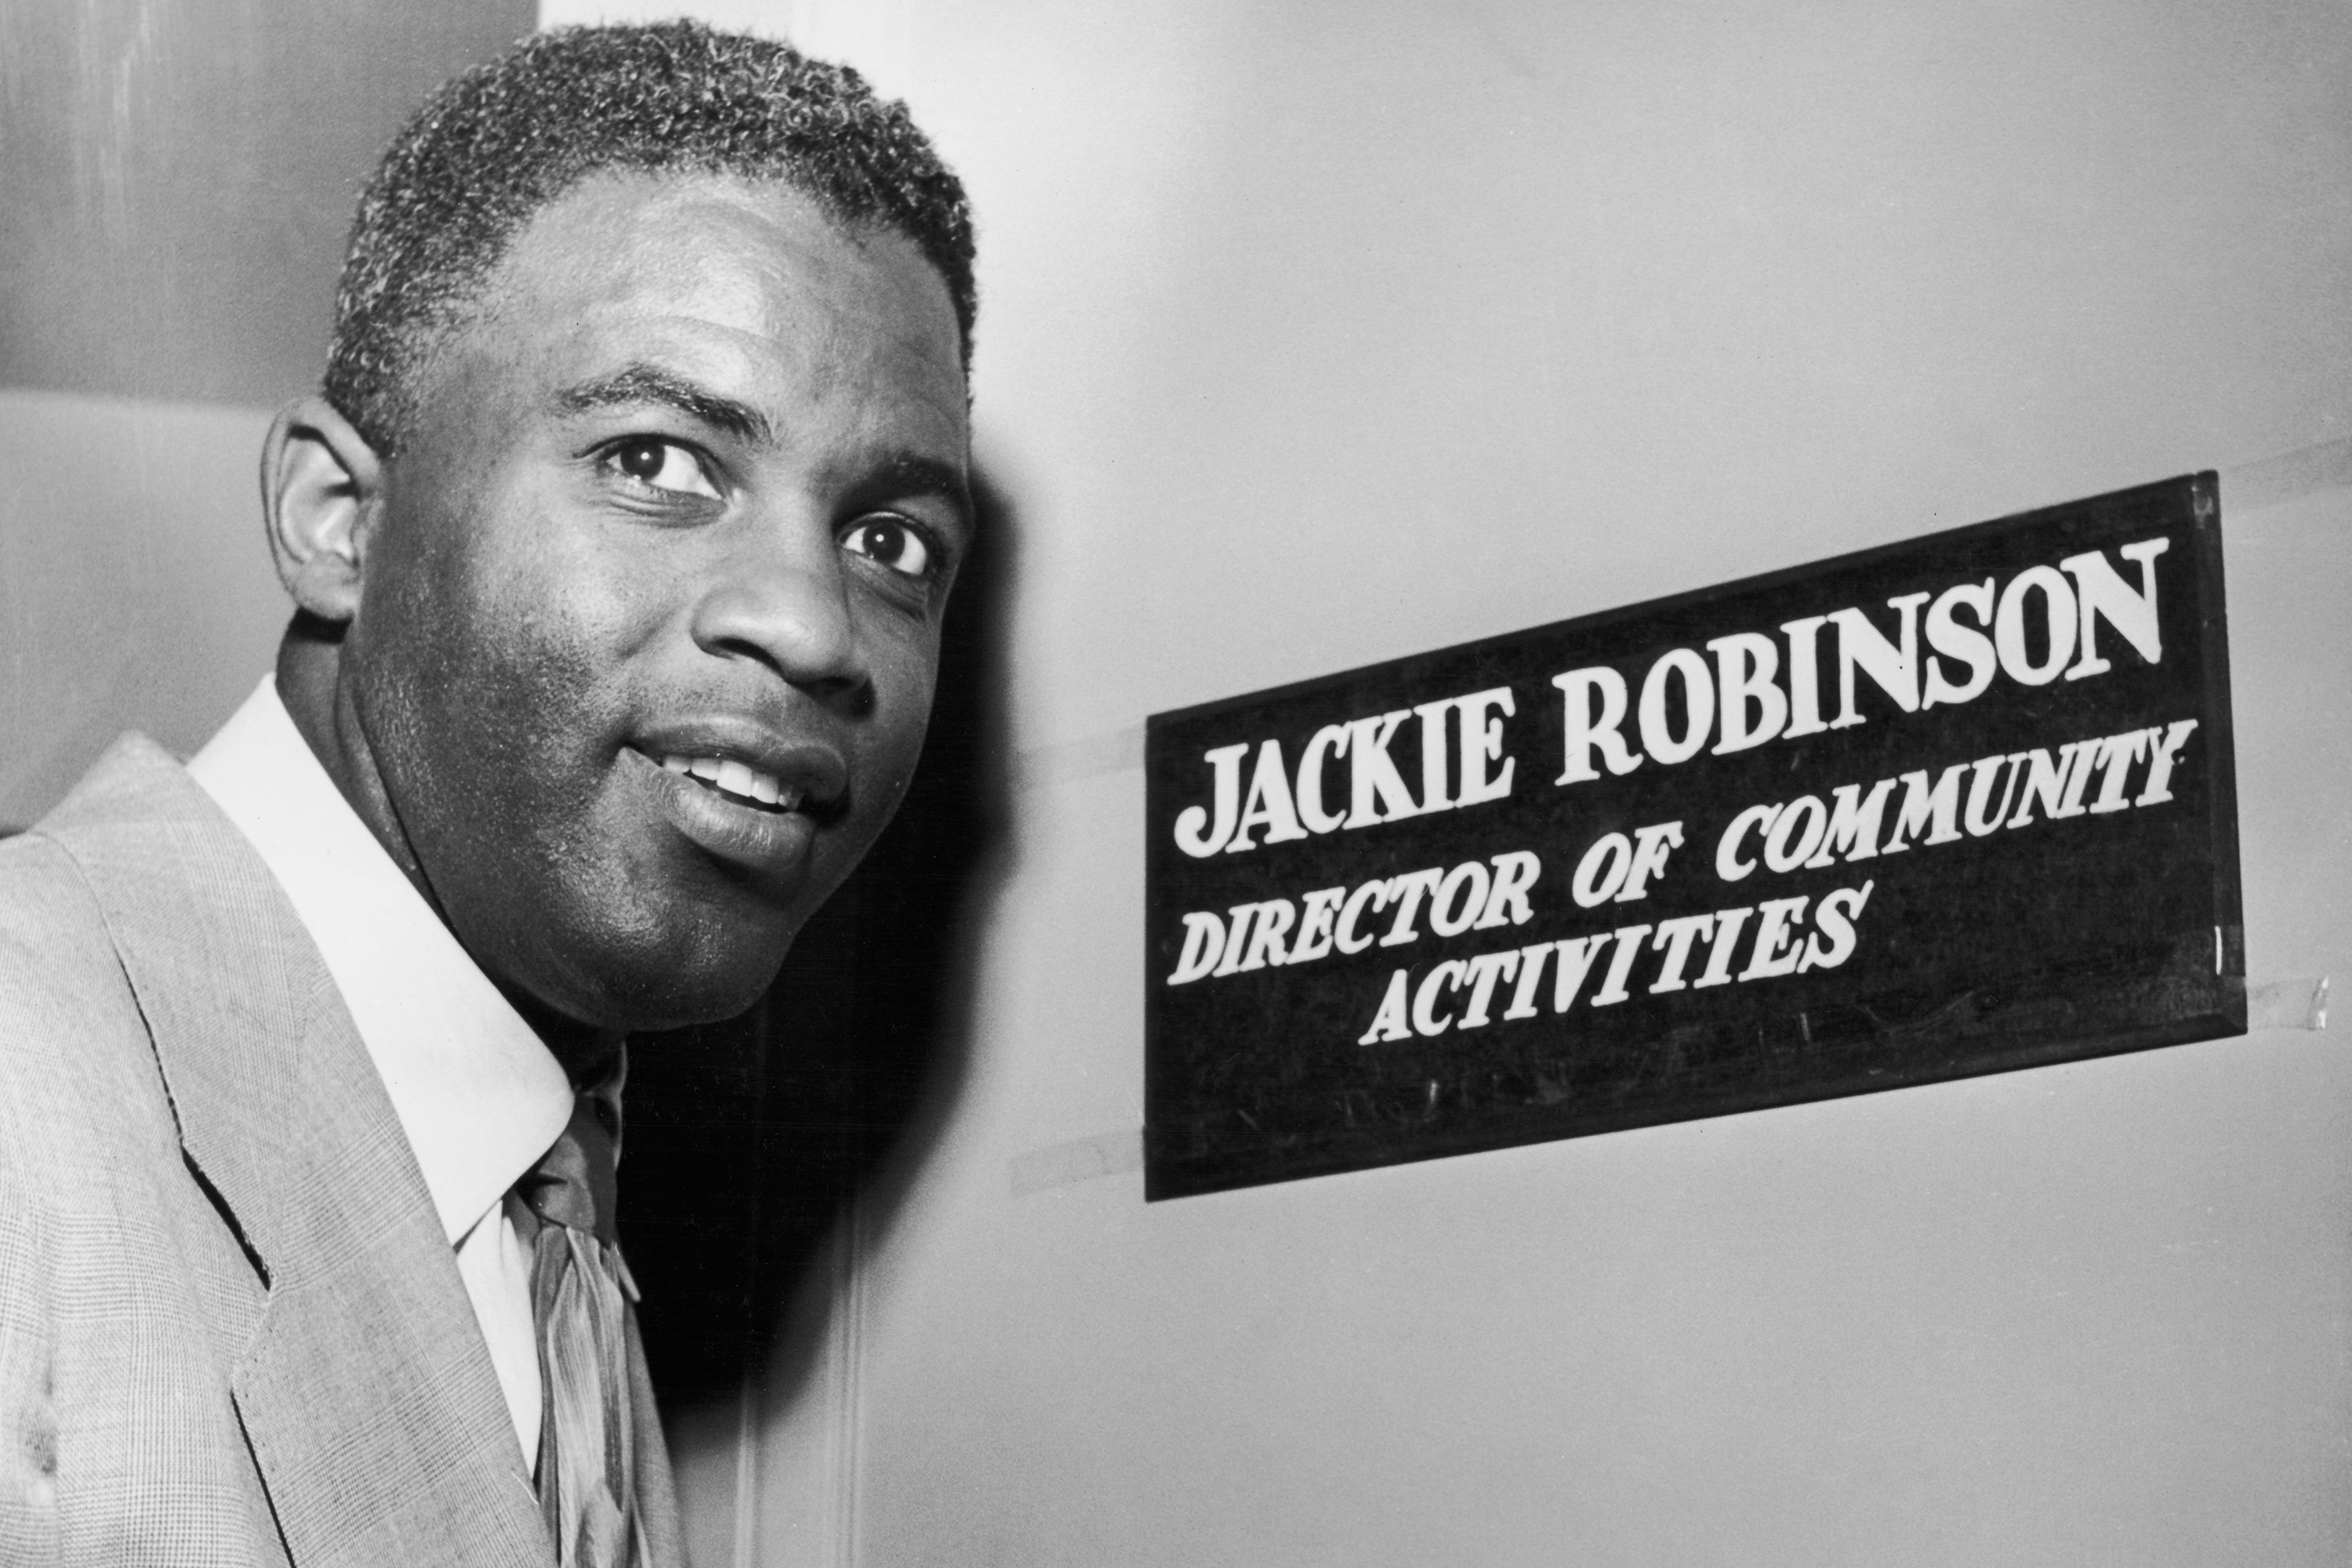 Jackie Robinson's widow decries MLB's lack of minority hiring